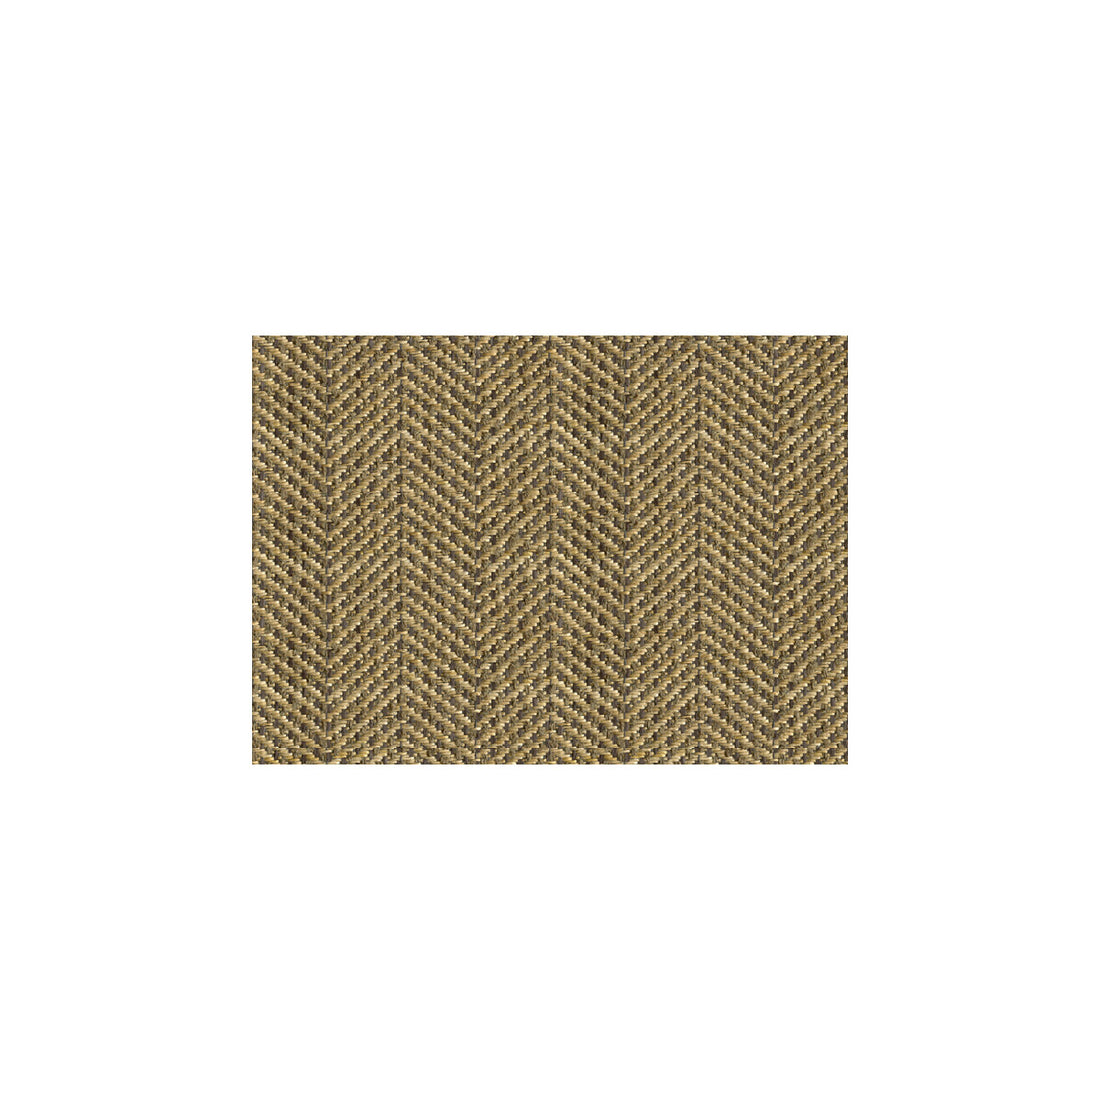 Kravet Smart fabric in 31748-11 color - pattern 31748.11.0 - by Kravet Smart